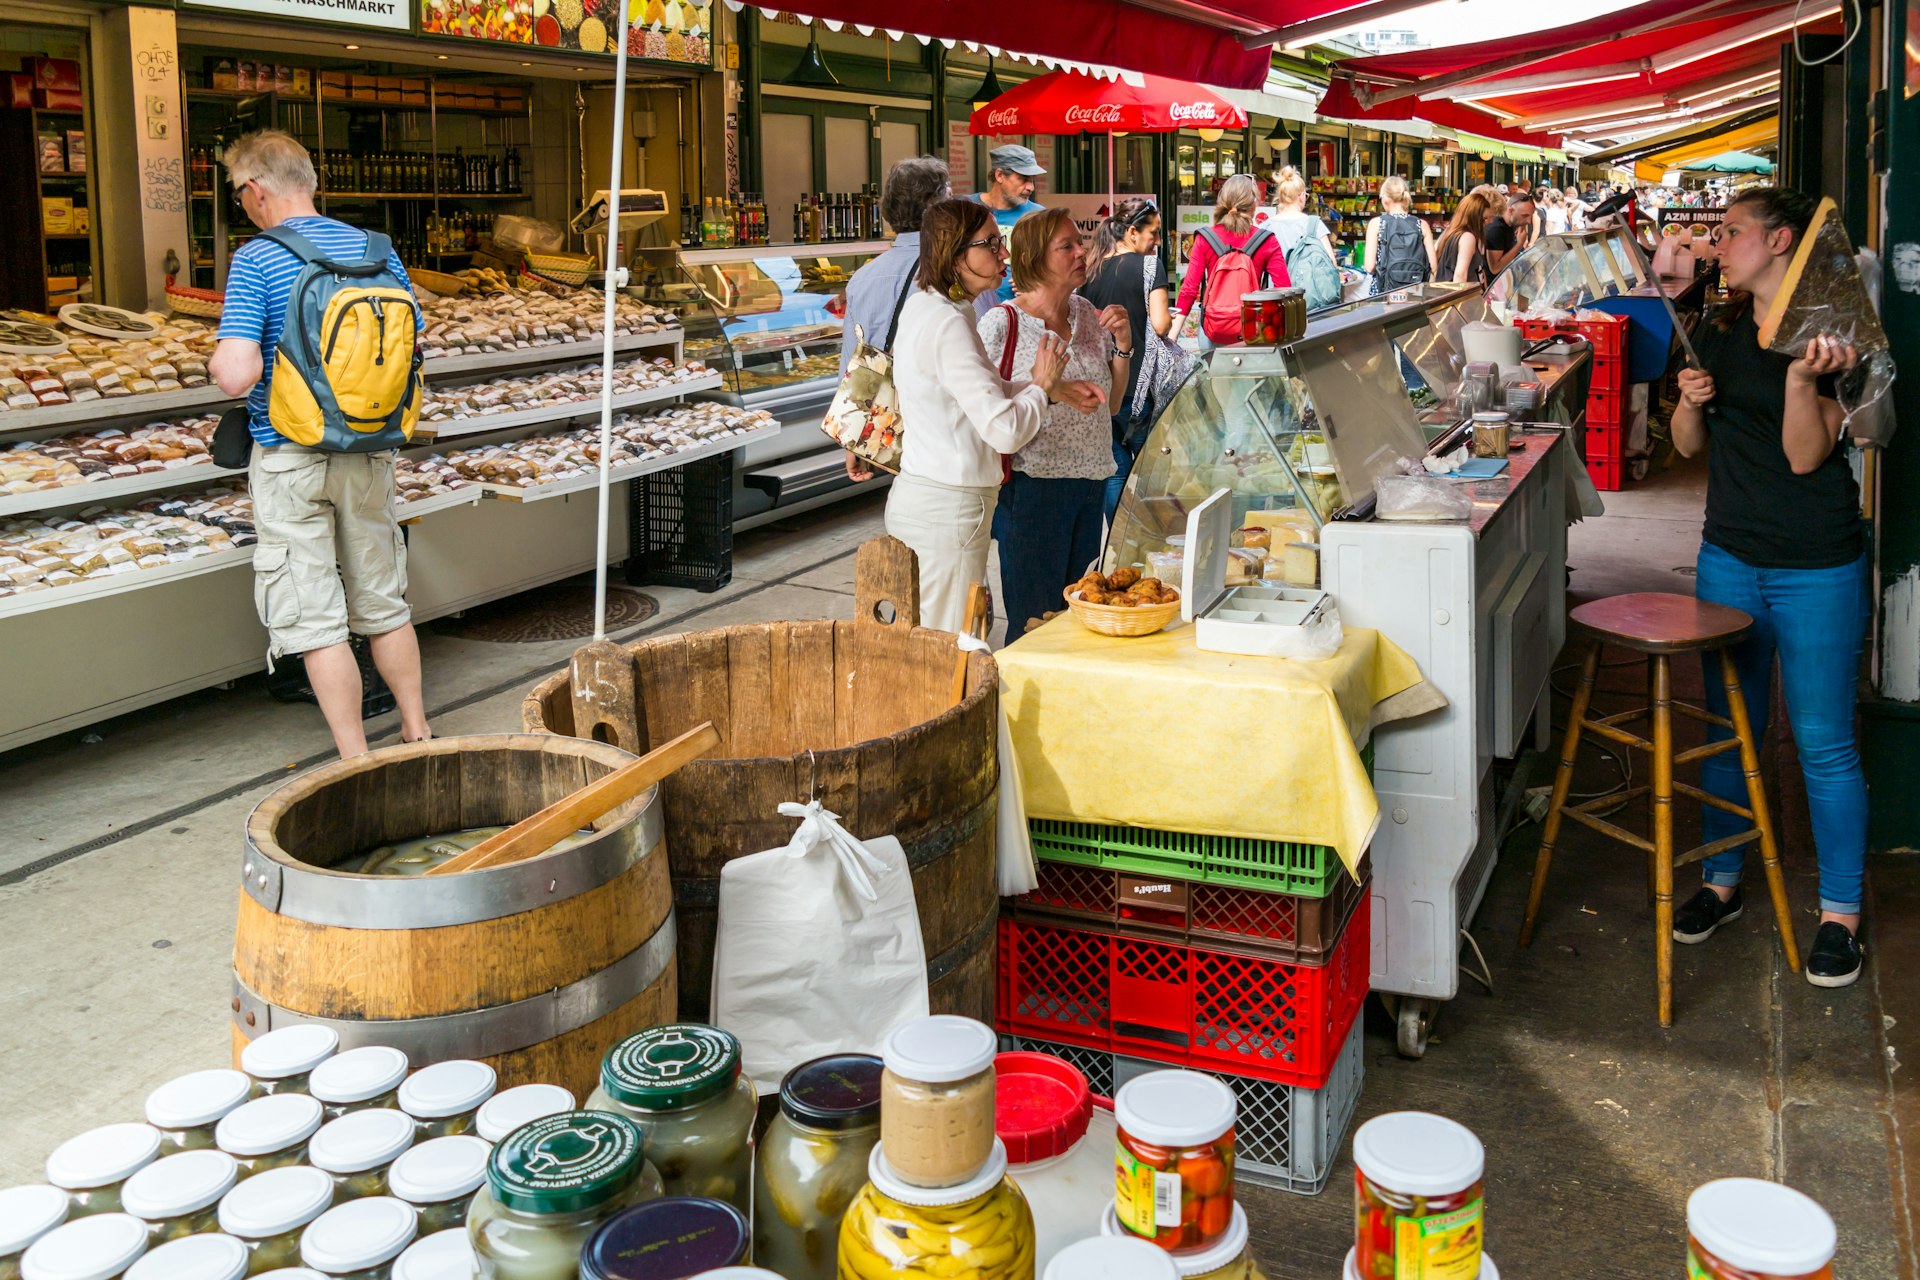 People buying food at market stands on Naschmarkt in Vienna